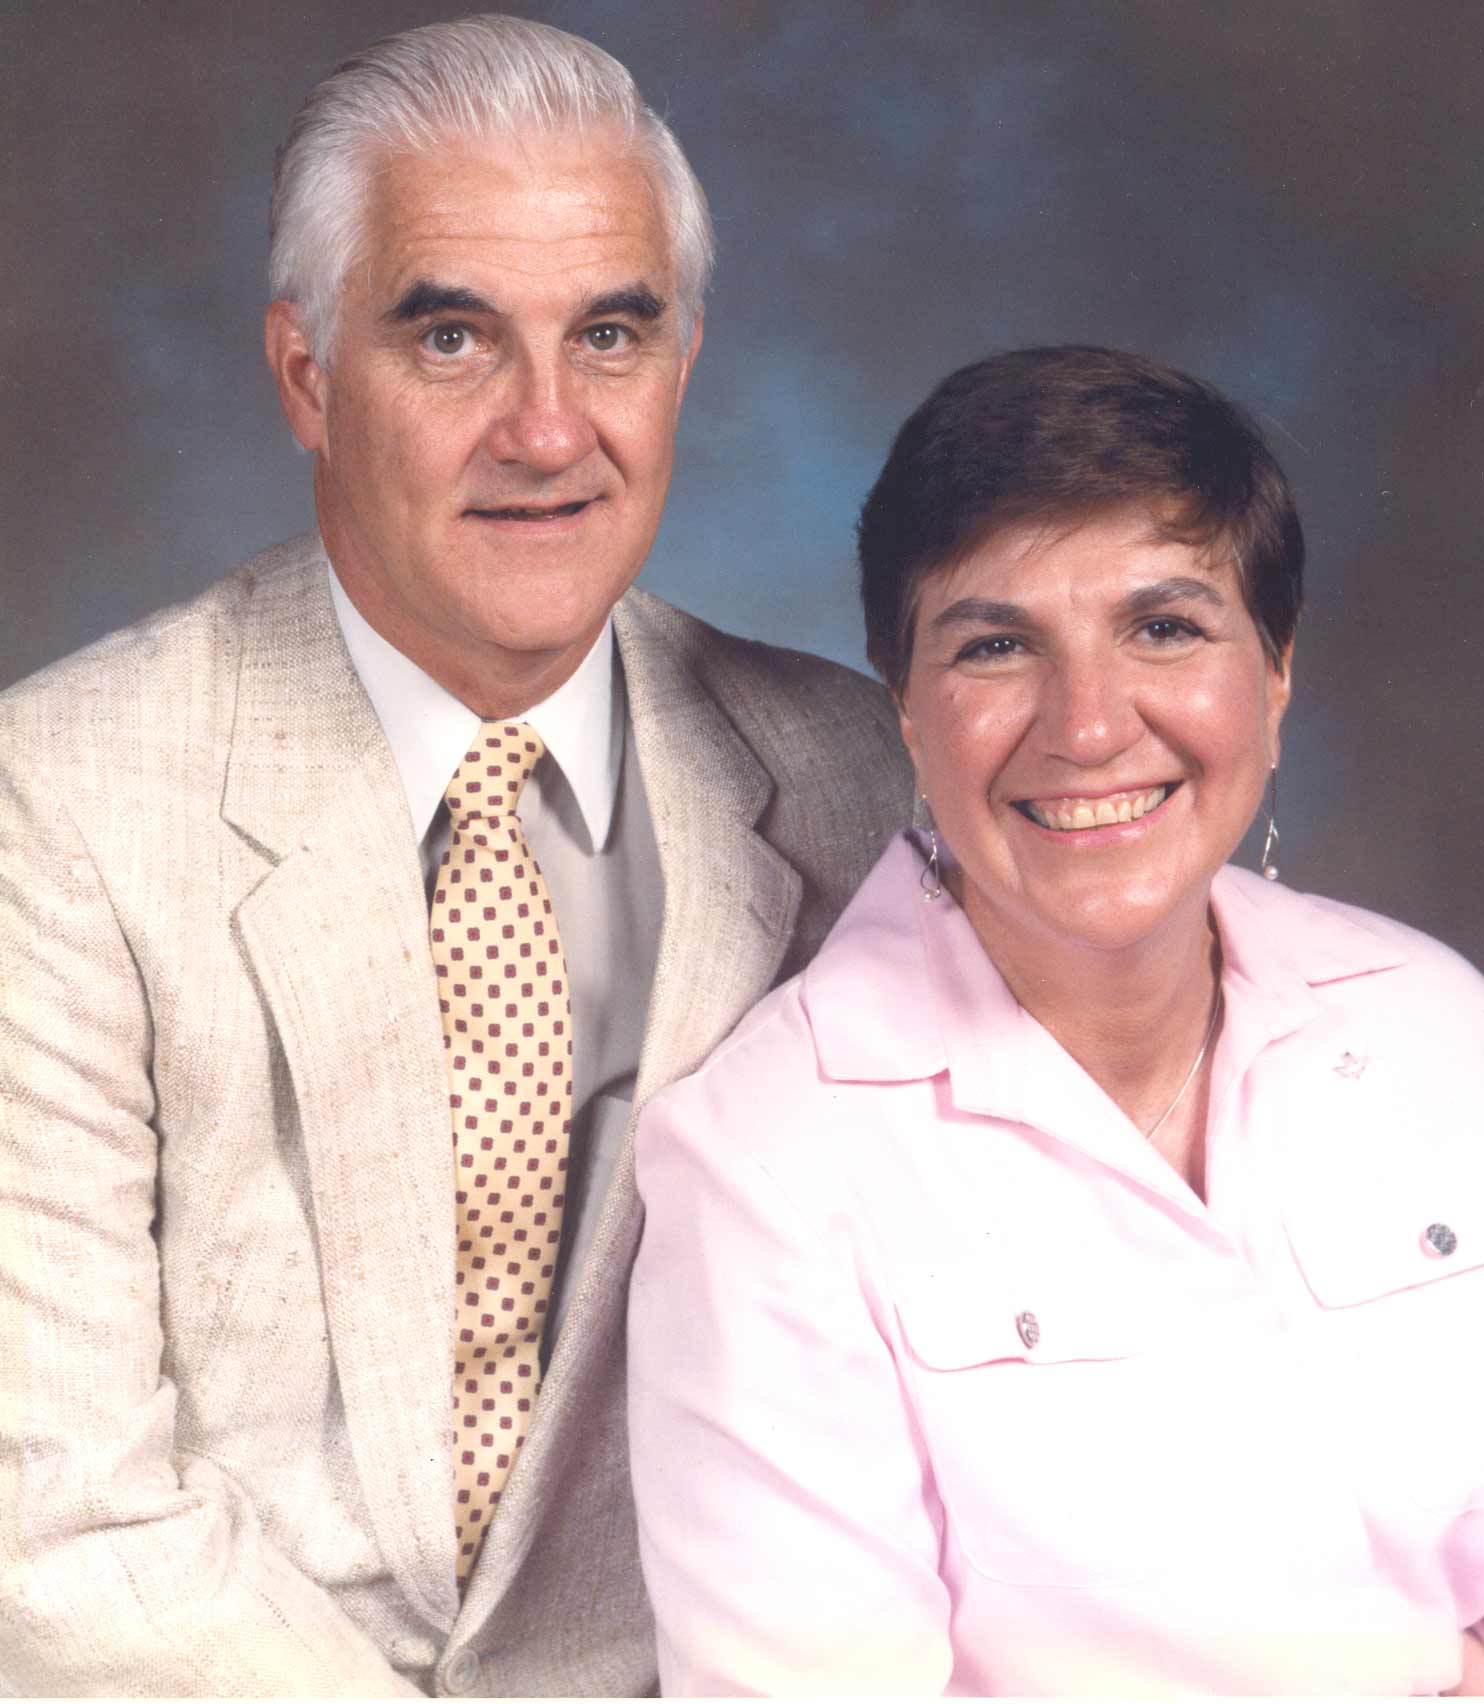 Joe Sweeney with wife Millie